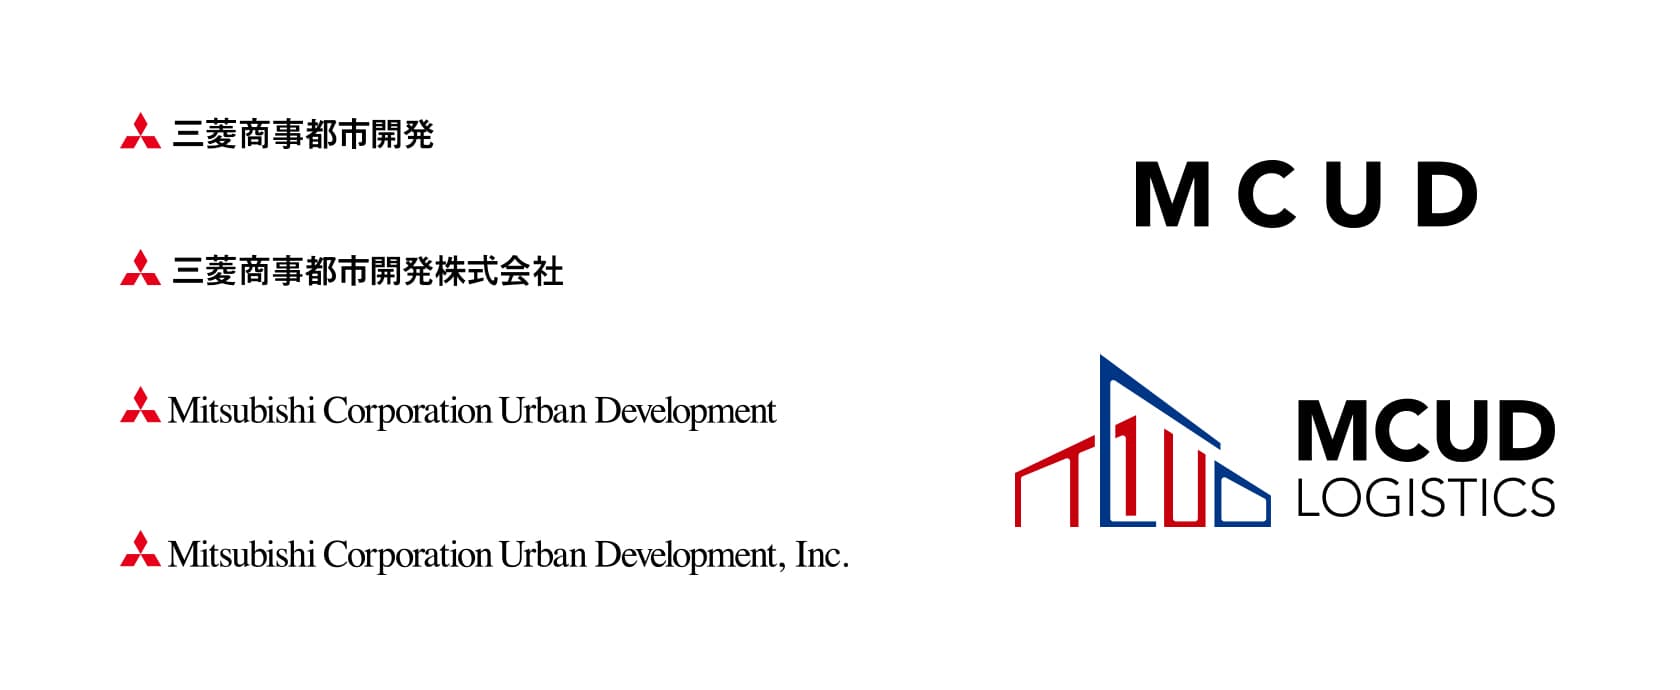 [Trademarks] Mitsubishi Corporation Urban Development,Inc. [MCUD]